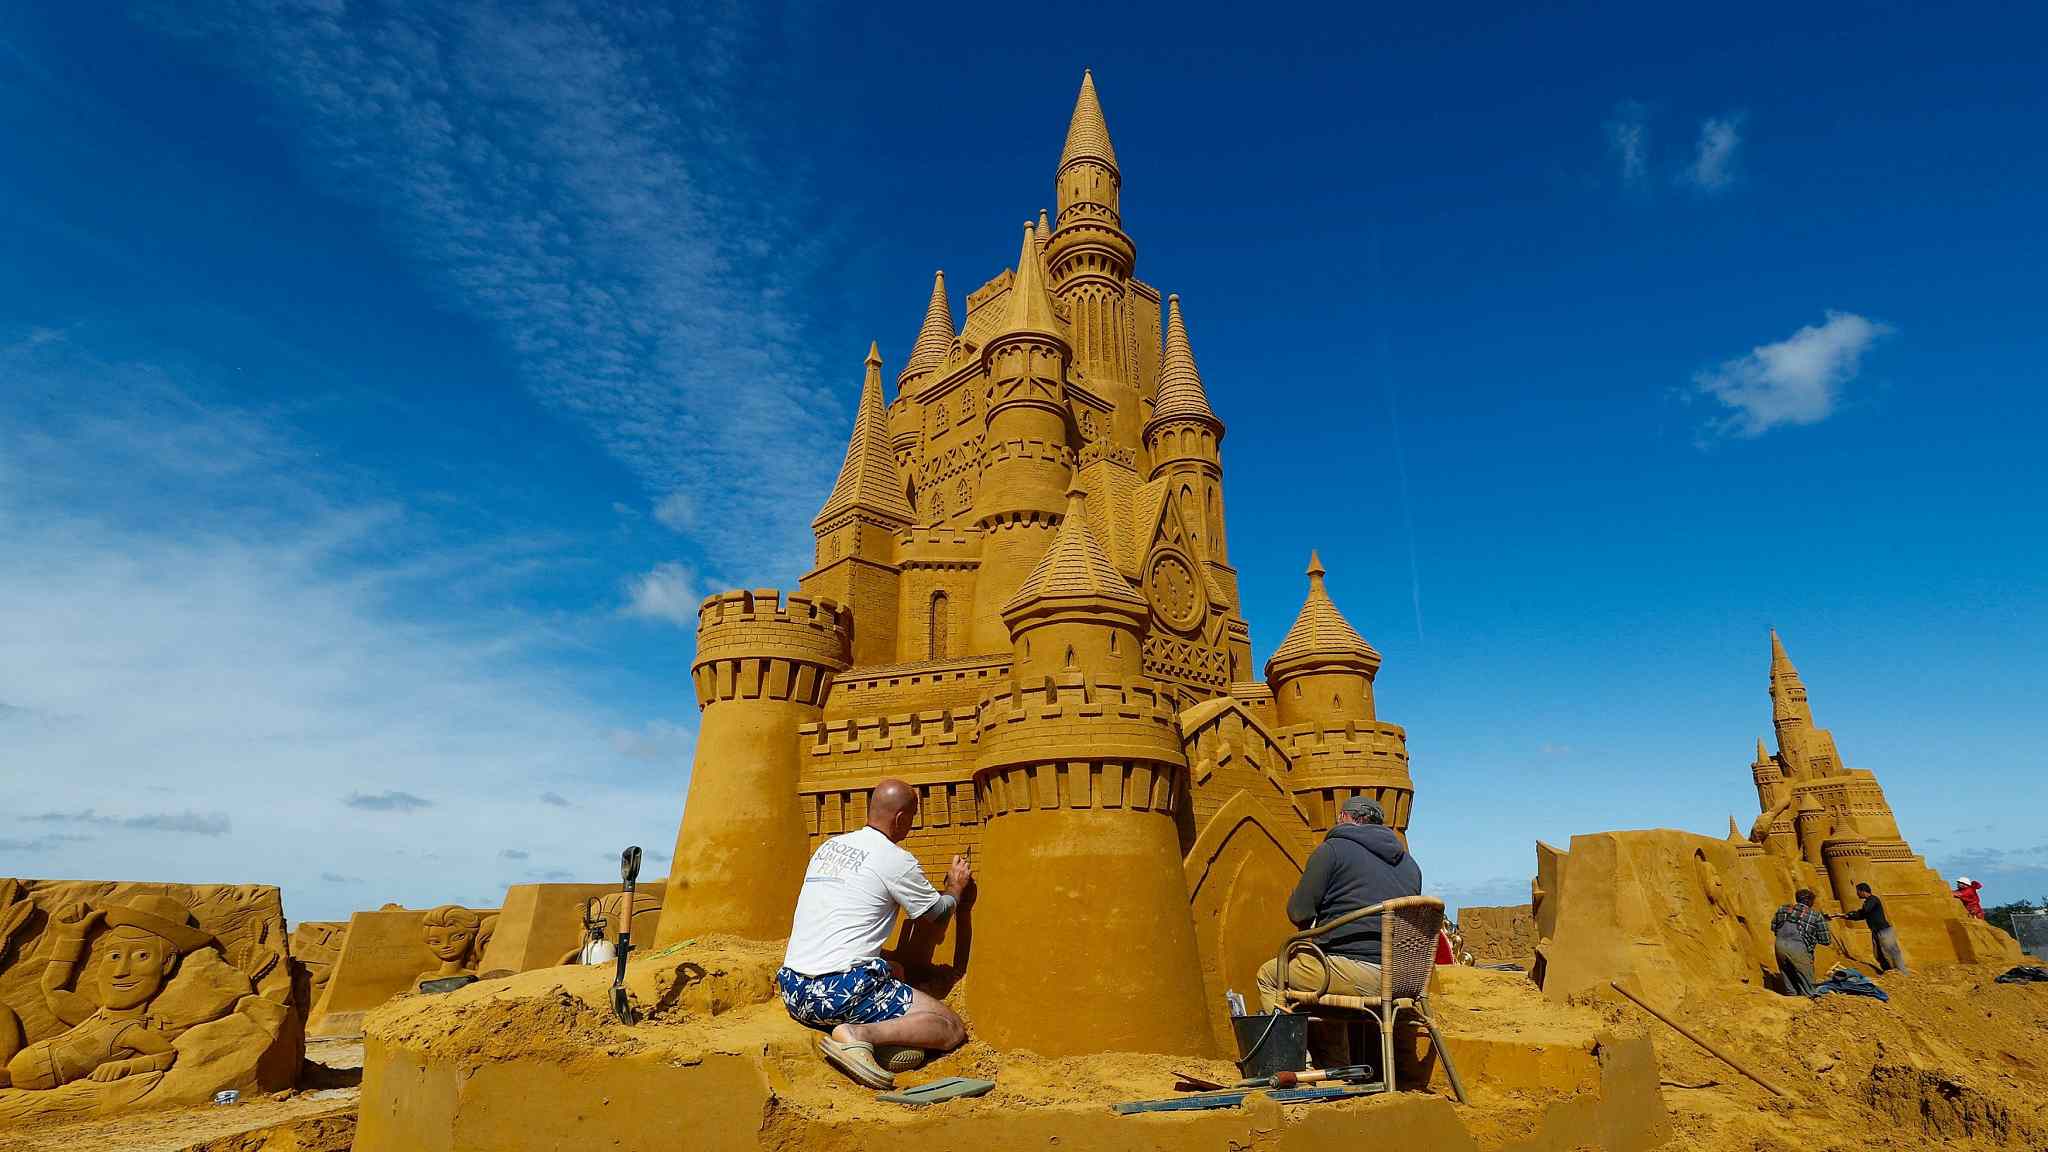 Sven and Christoff from the Disney Film Frozen, sand sculptures, Sand  Sculpture Festival Frozen Summer Sun, Oostende, West Flanders, Belgium,  Europe. - Album alb3865046